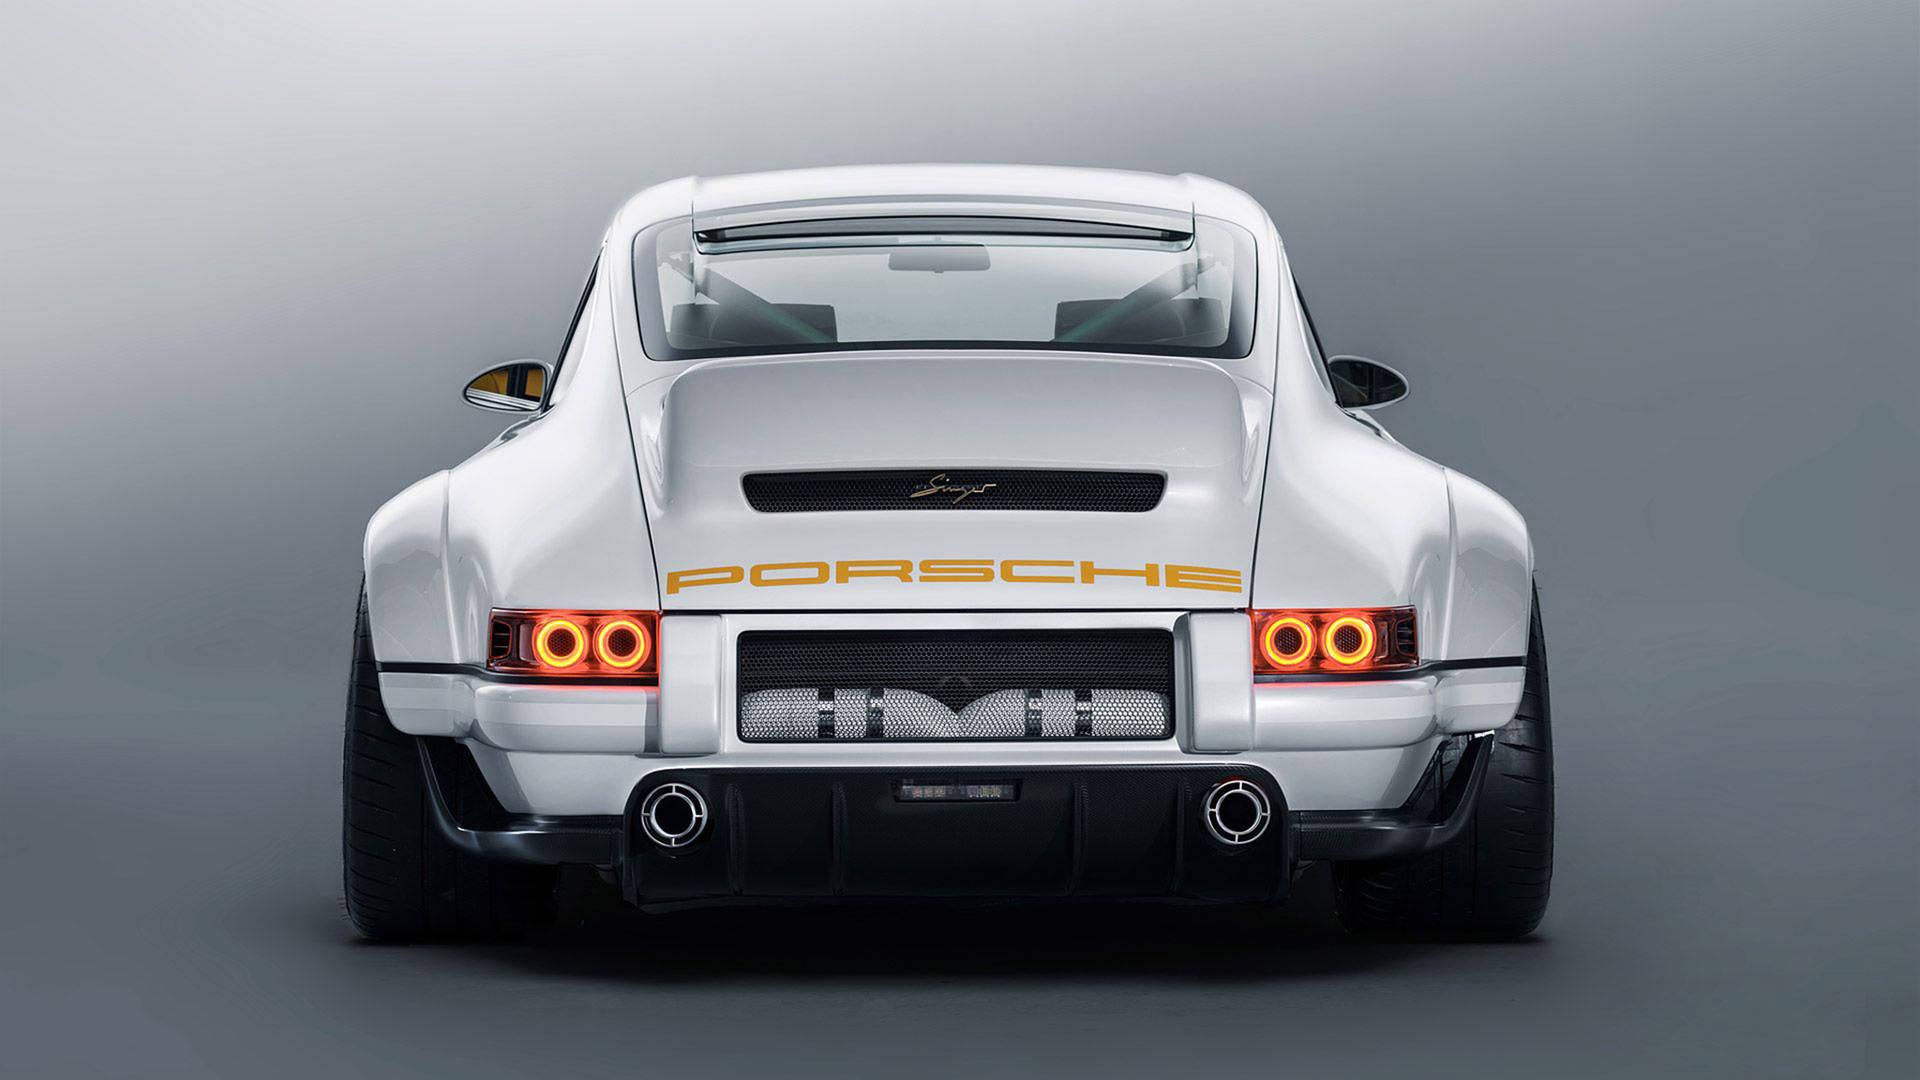 Exquisite Rear View Of A White Singer Porsche